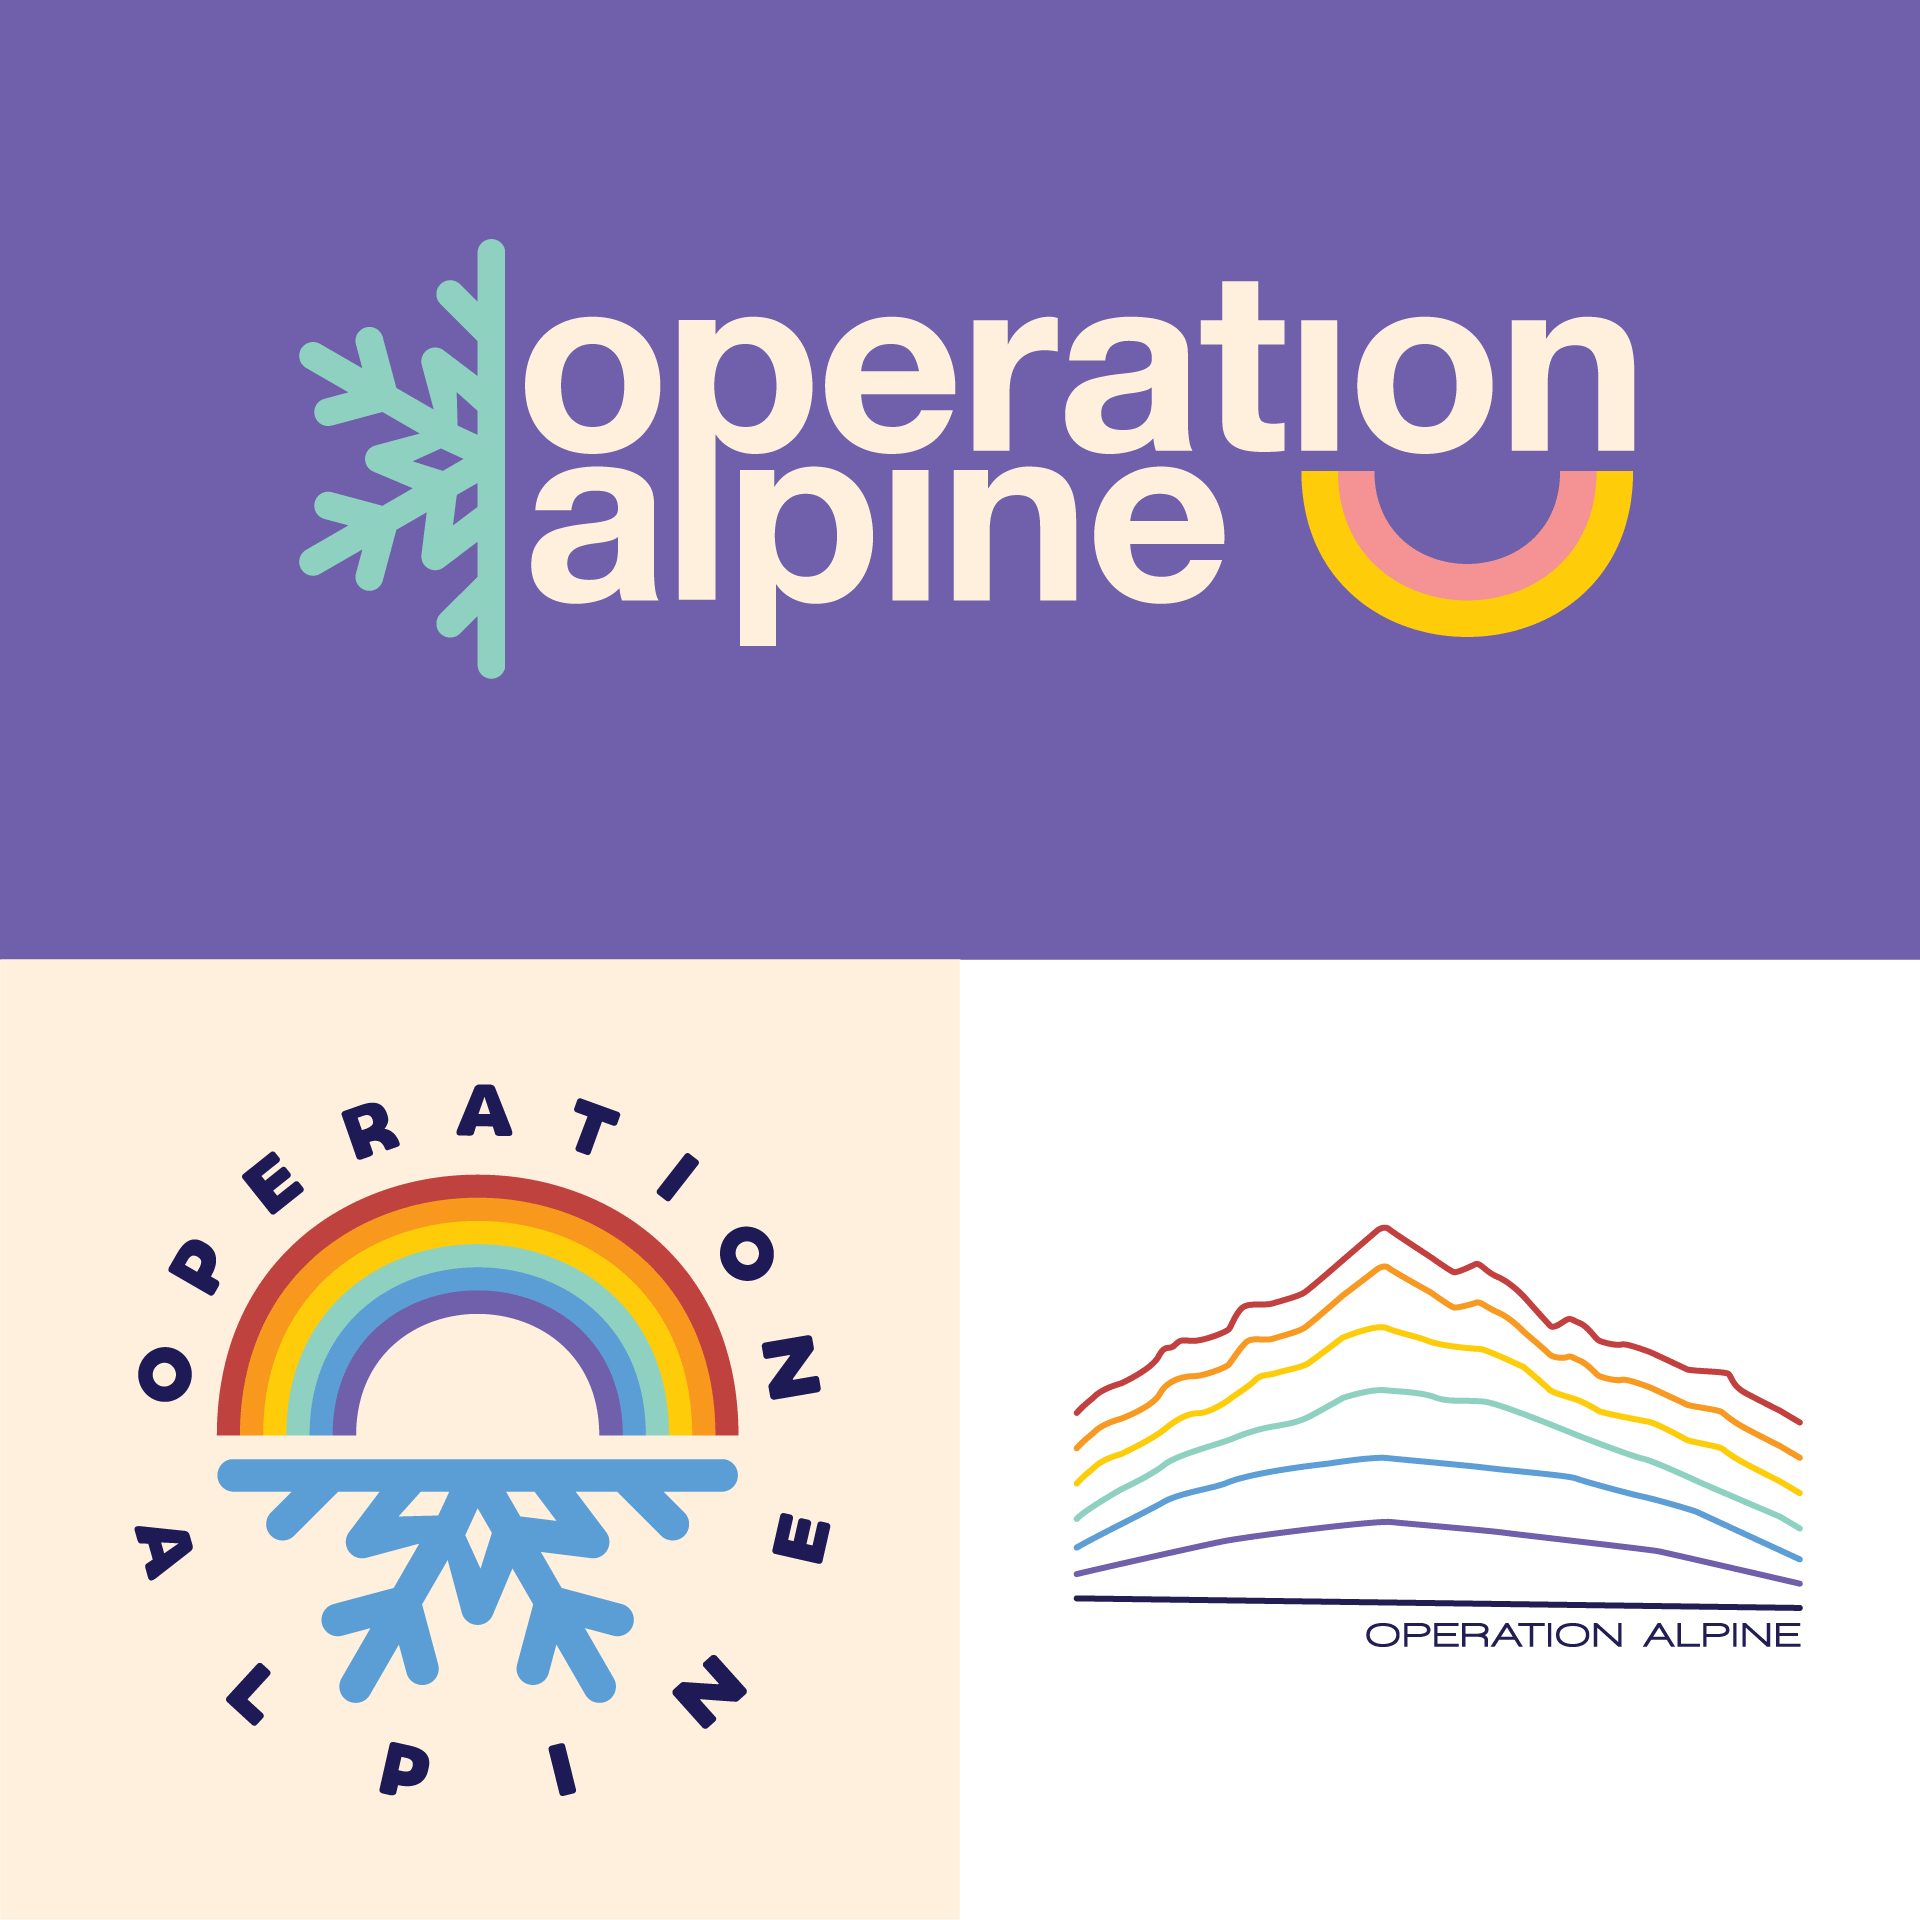 Operation Alpine alternate logo design ideas